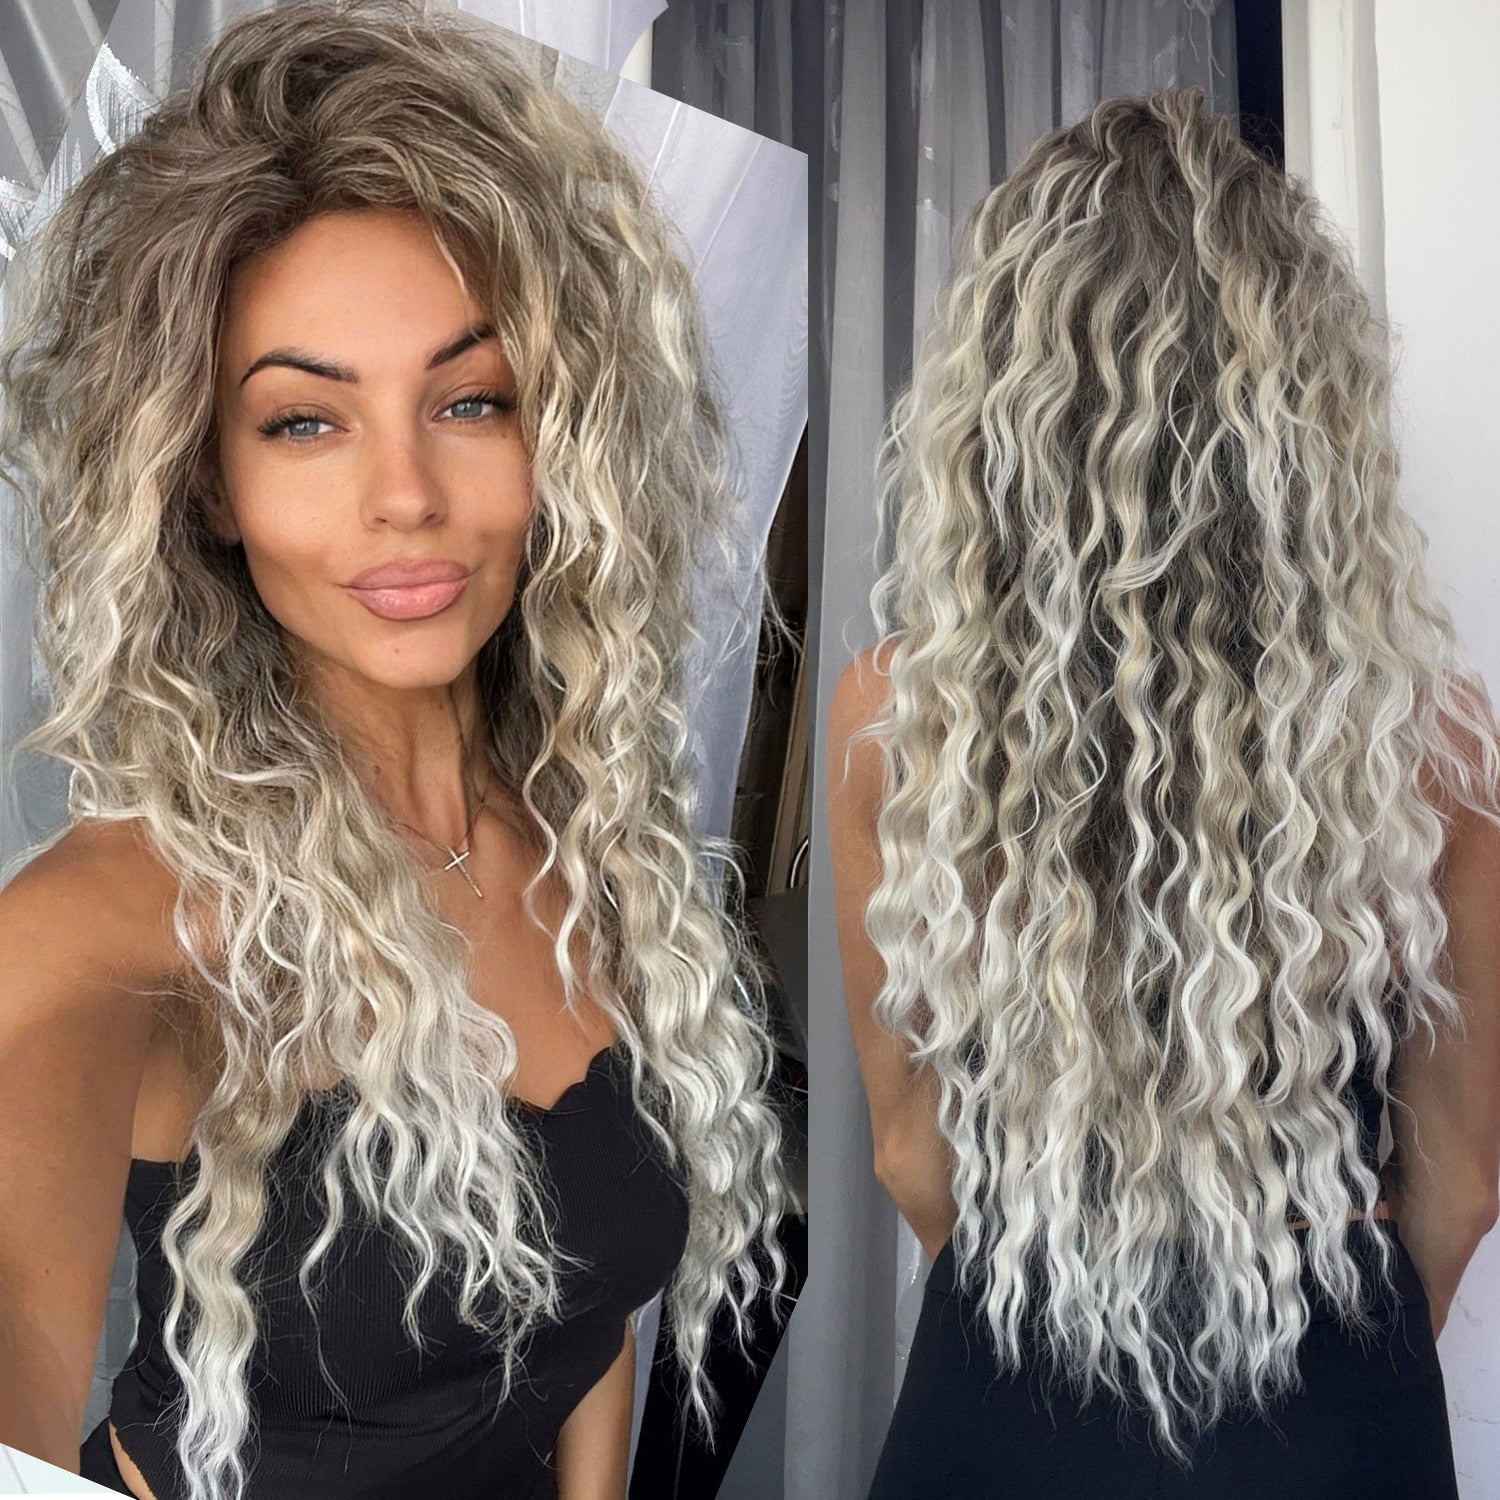 Long Blonde 19 Colors Curly Hair Wigs - HairNjoy